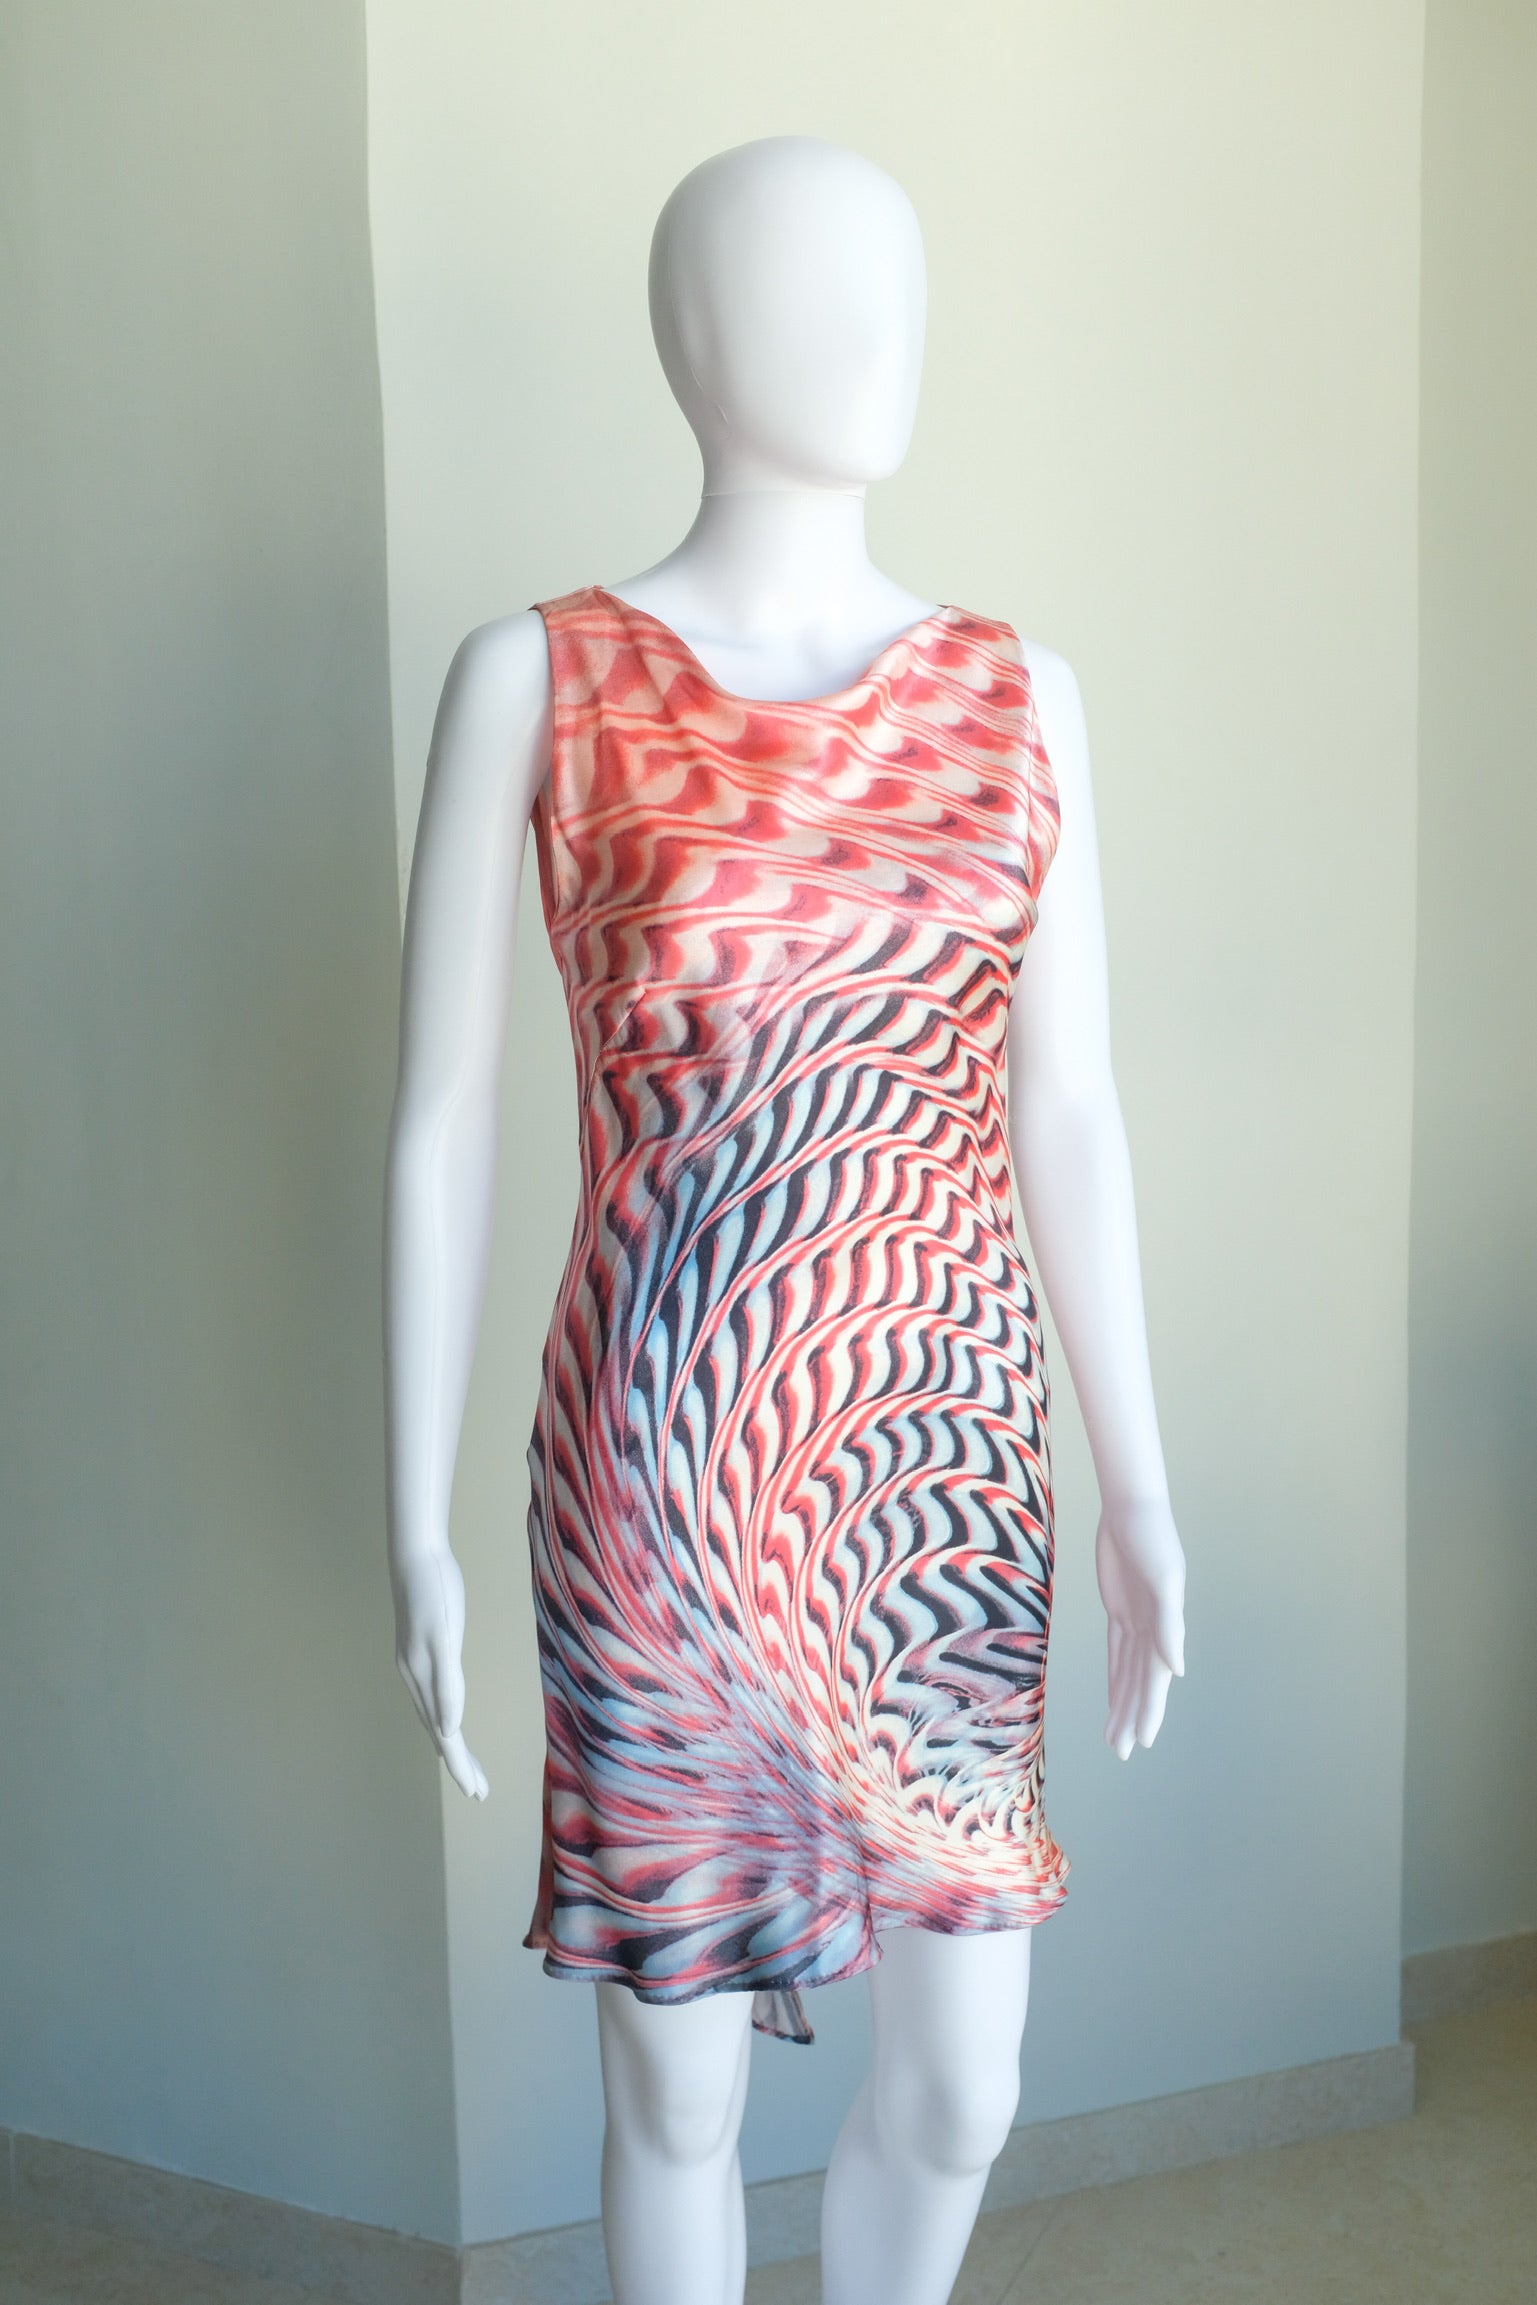 Roberto Cavalli S/S 2001 Psychedelic Print Dress